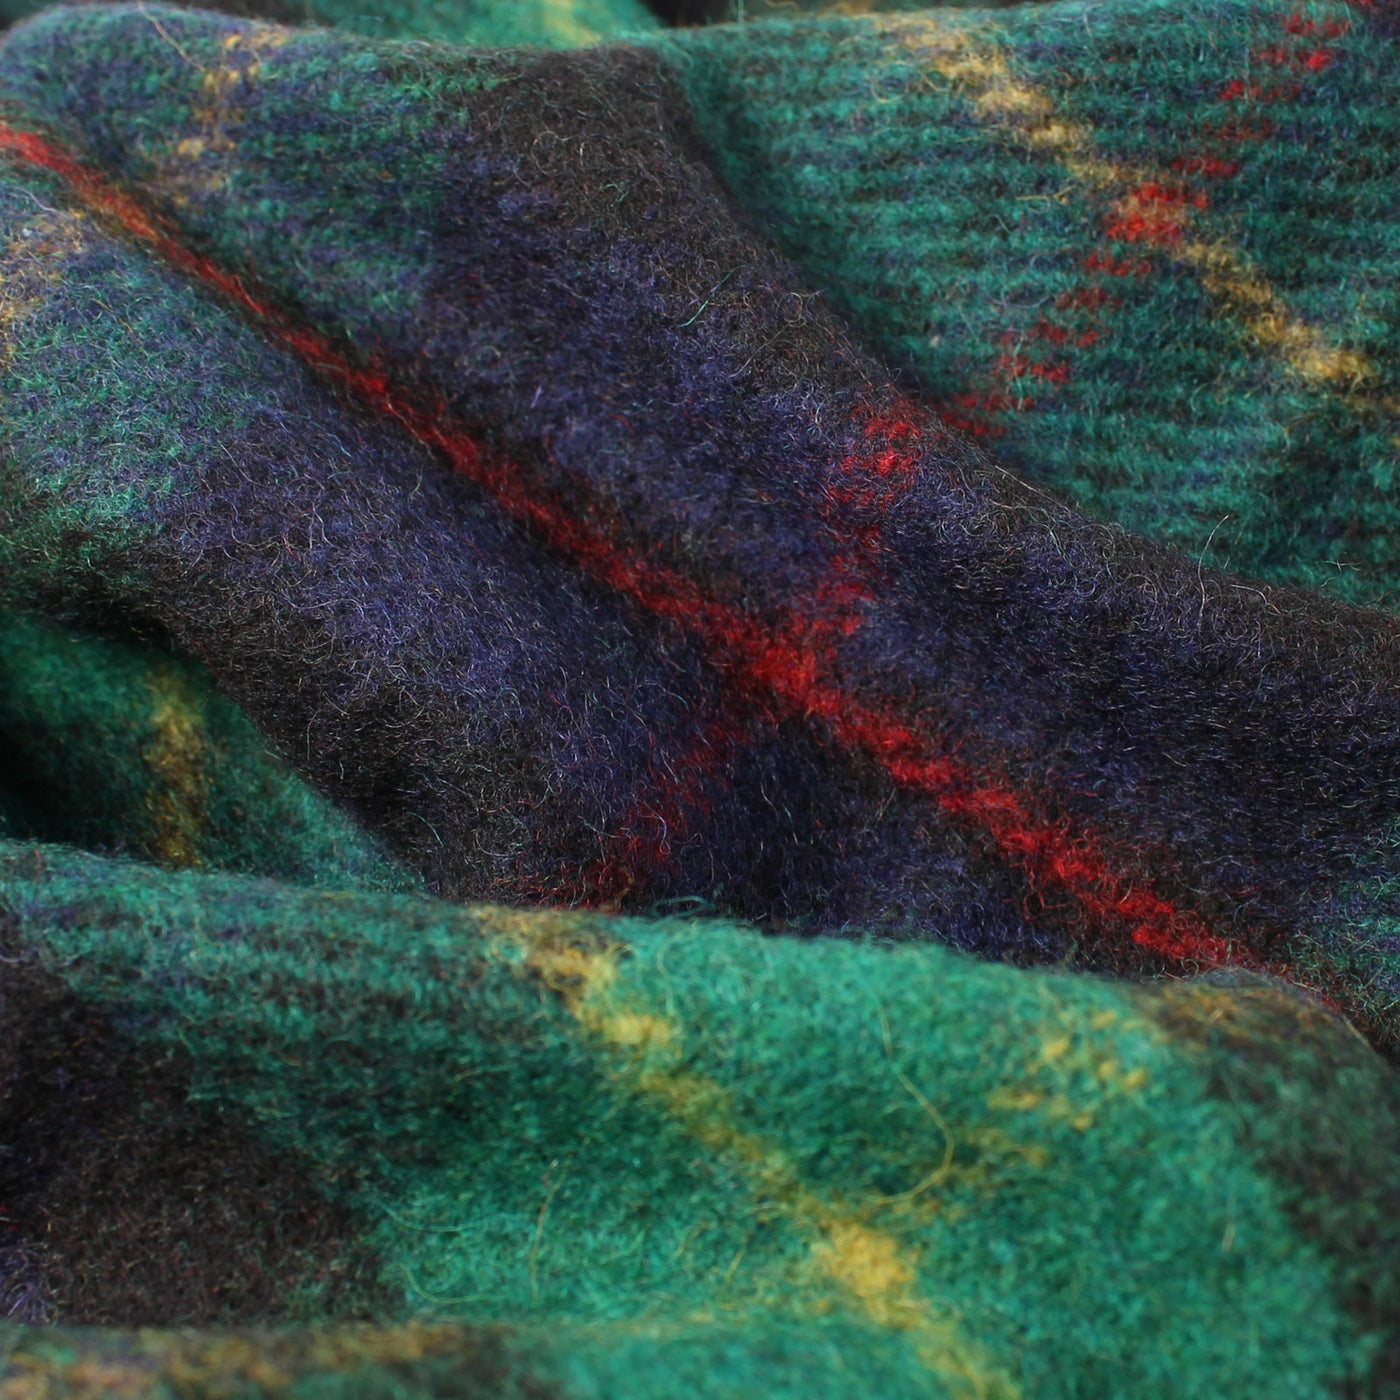 Highland Wool Blend Tartan Blanket / Throw Extra Warm Farquharson - Dunedin Cashmere